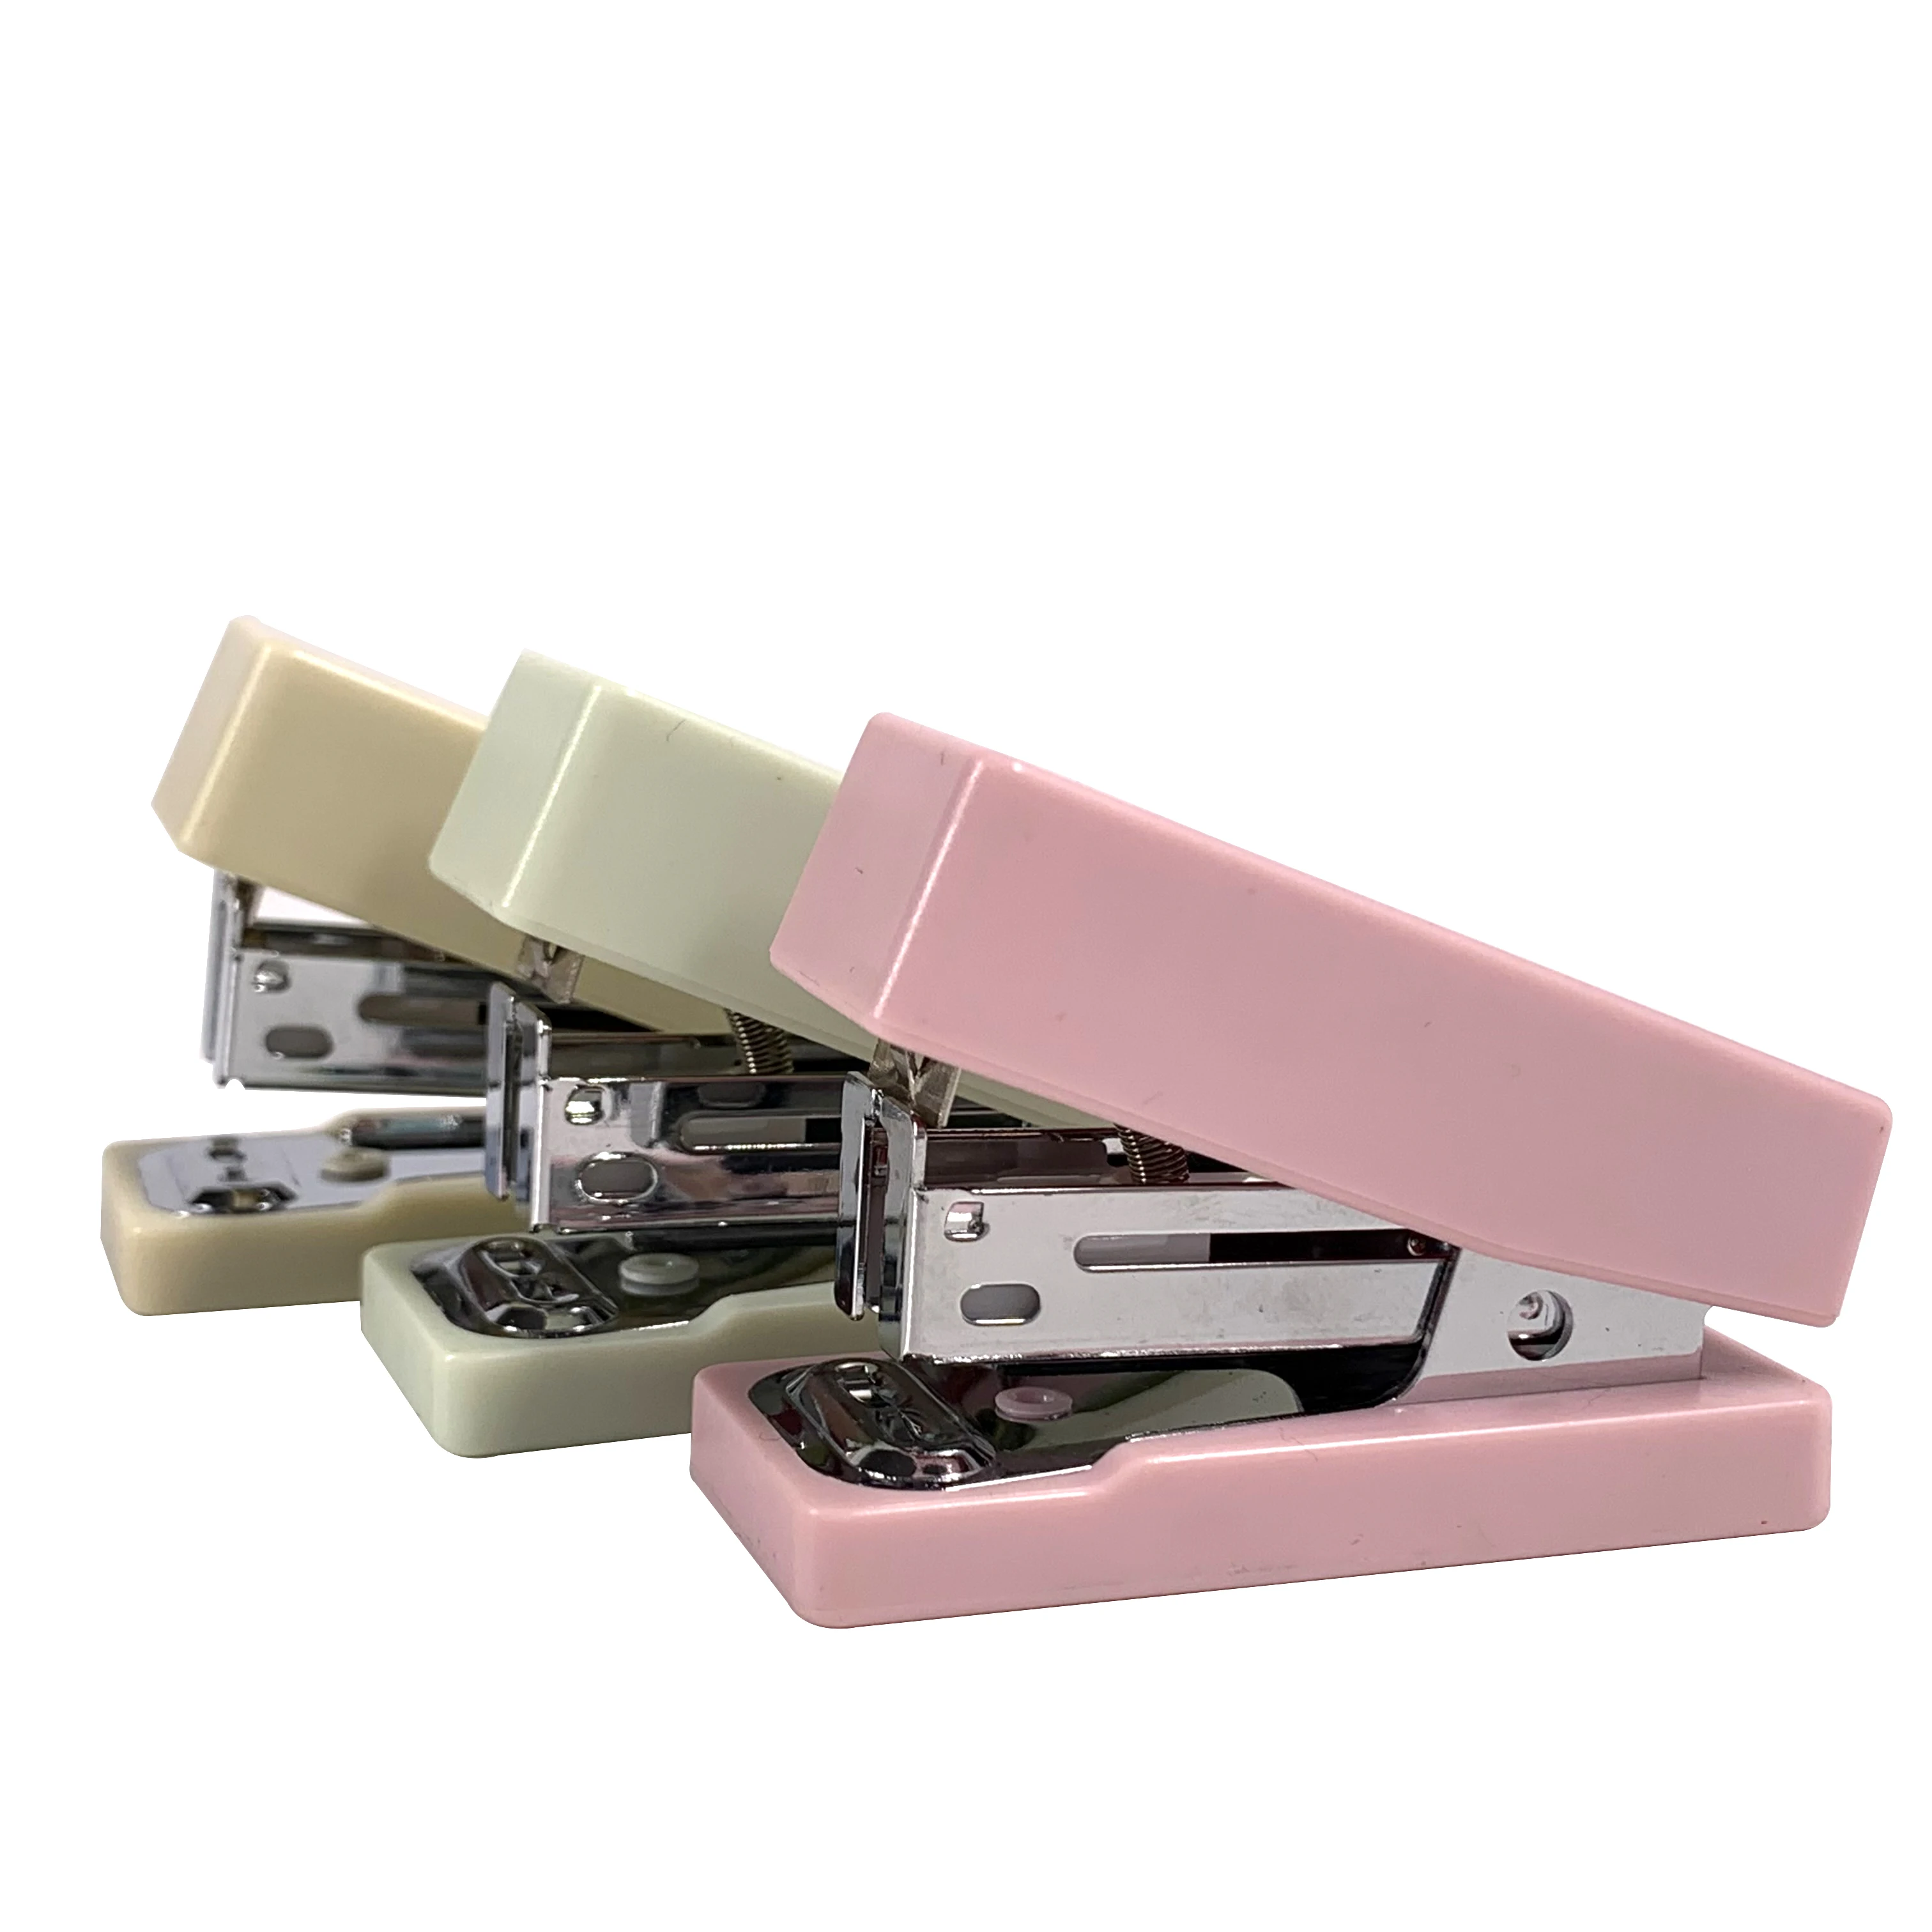 Mini Design Staplers And Office Supplies, Stapler Machine Office Standard 24Sheets Manual Paper Stapler